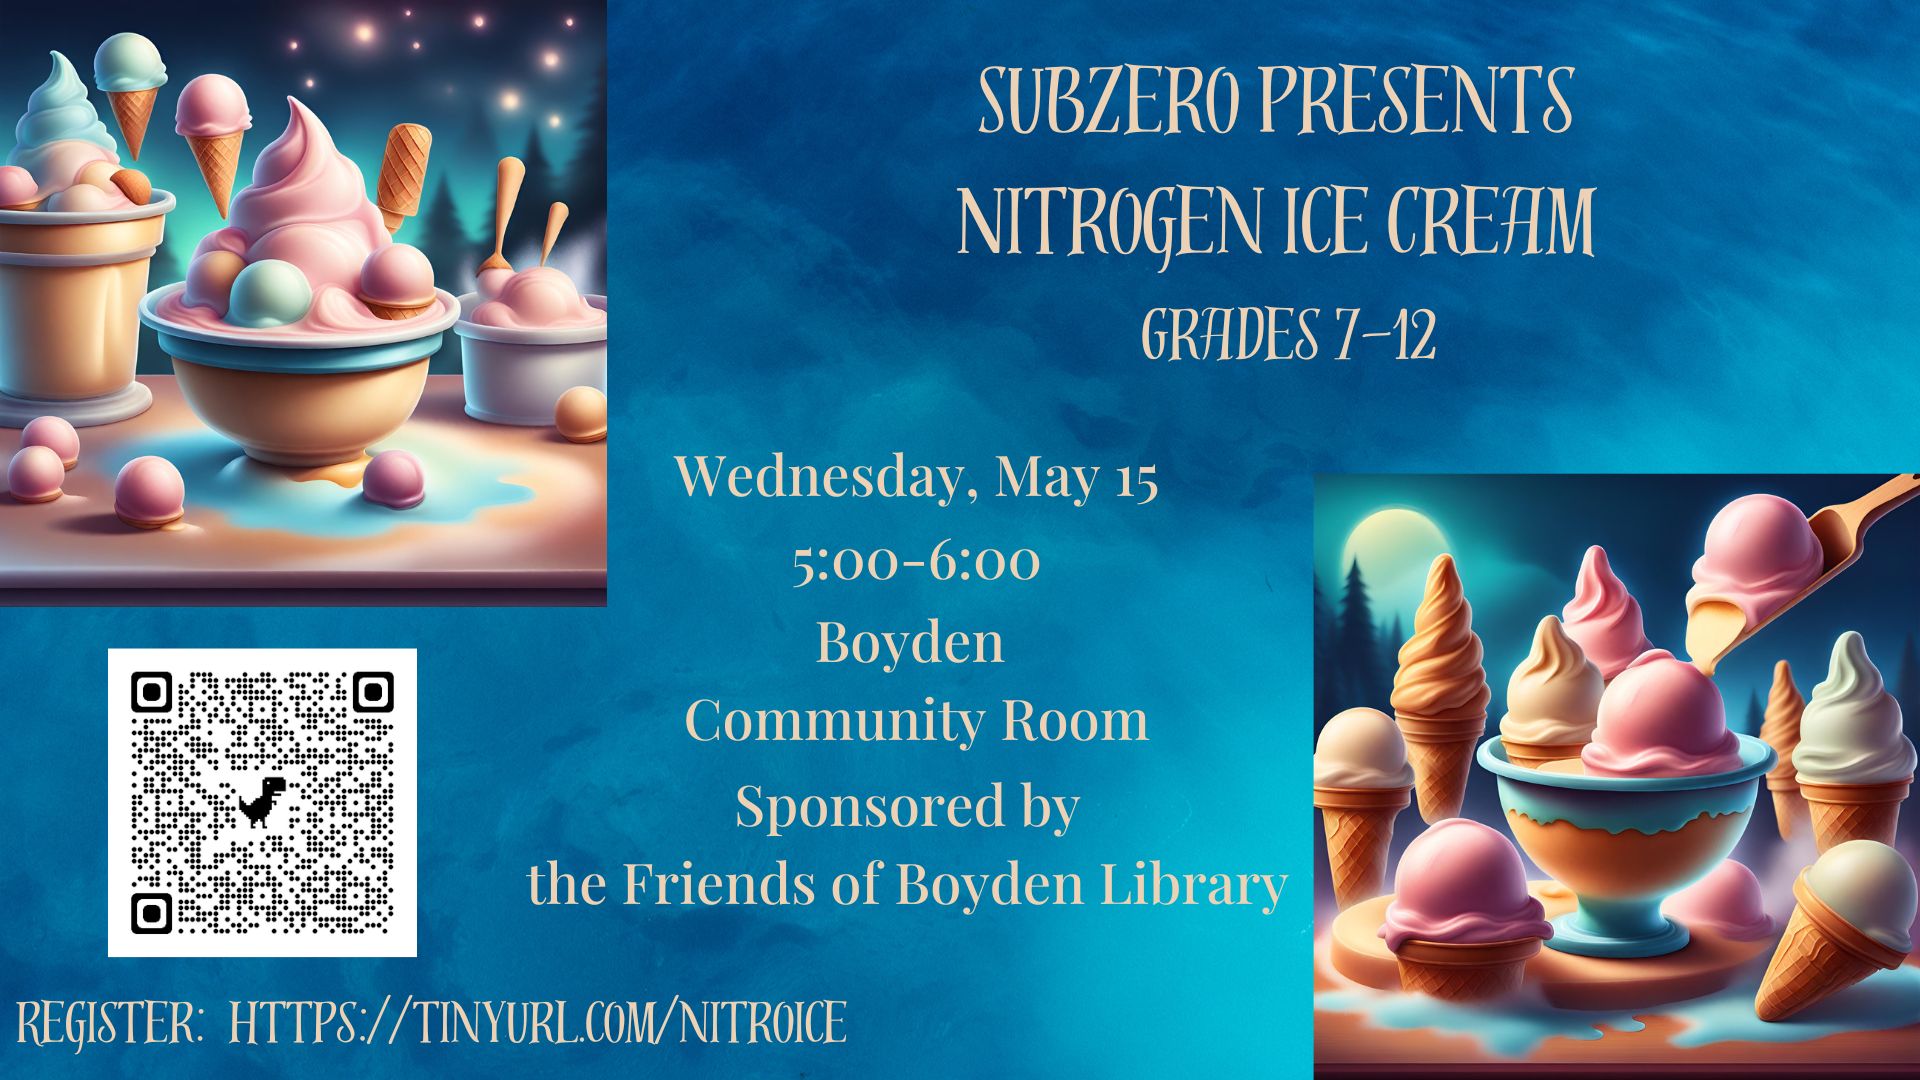 Nitrogen Ice Cream with Sub Zero Nitrogen, Grades 7-12